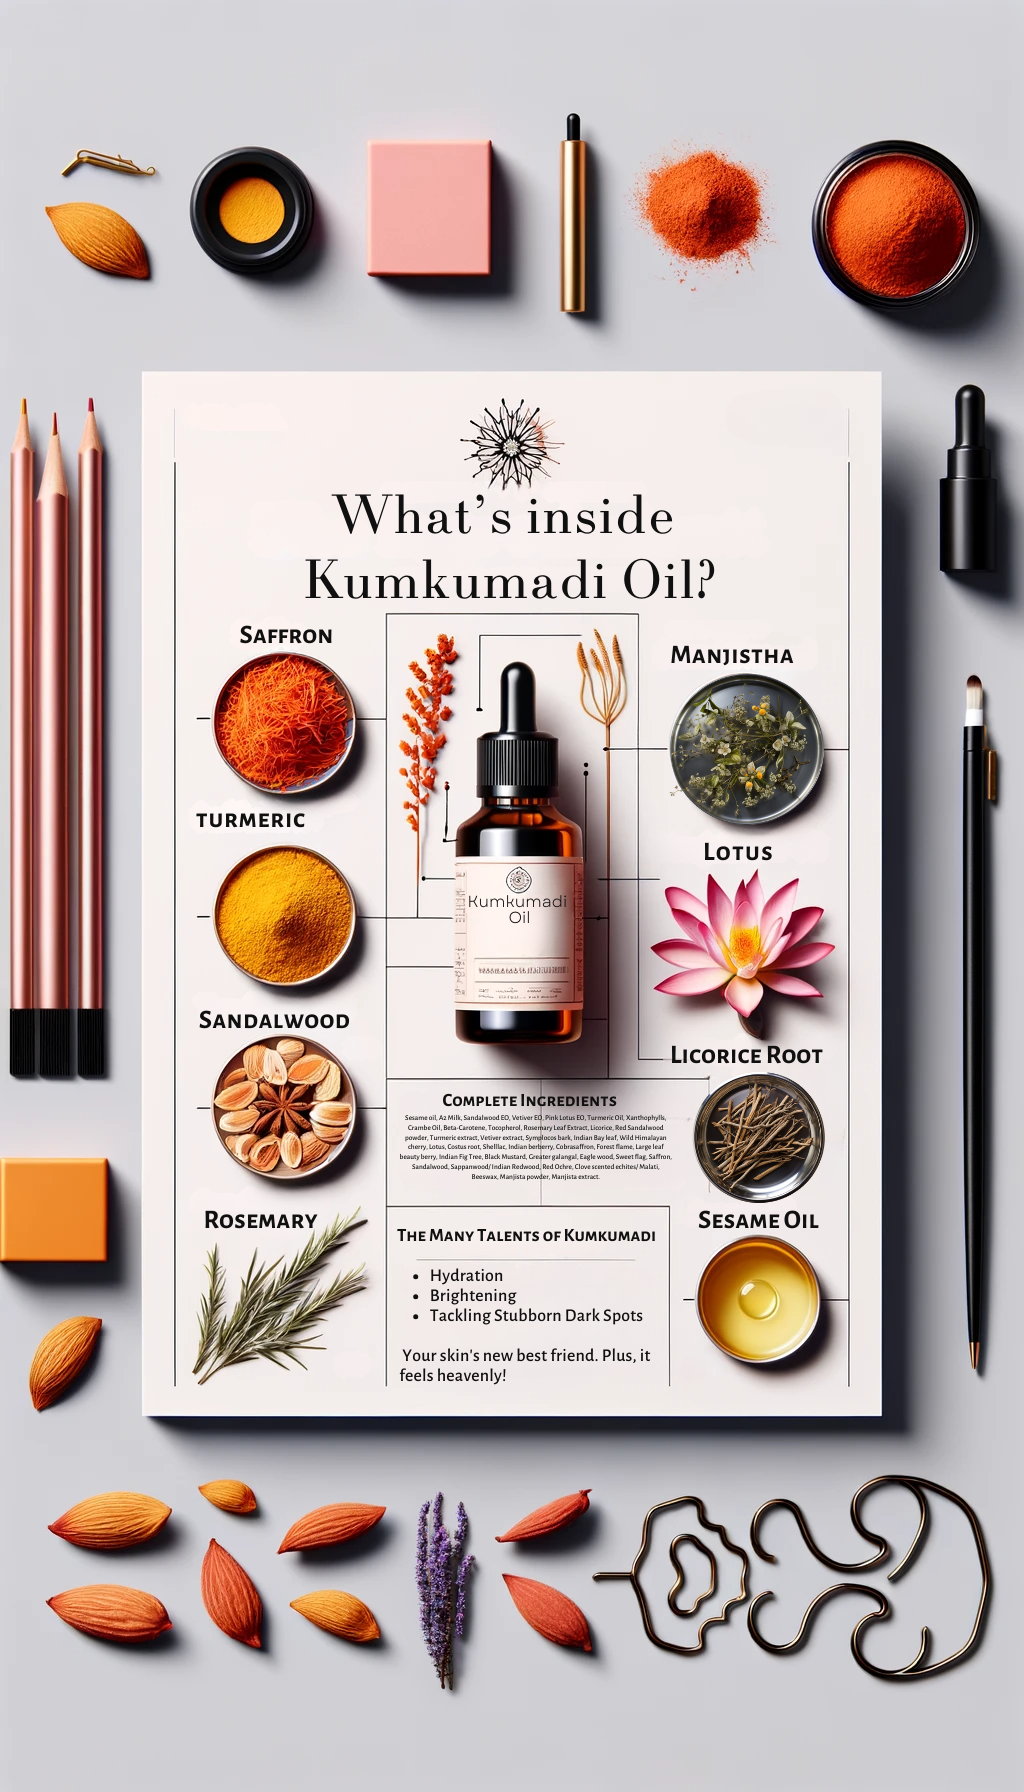 Infographic: What's inside Kumkumadi Oil? The ingredients of kumkumadi oil including Saffron, tumeric, sandalwood, rosemary, manjistha, lotus, licorice root, sesame oil and other ayurvedic herbs.